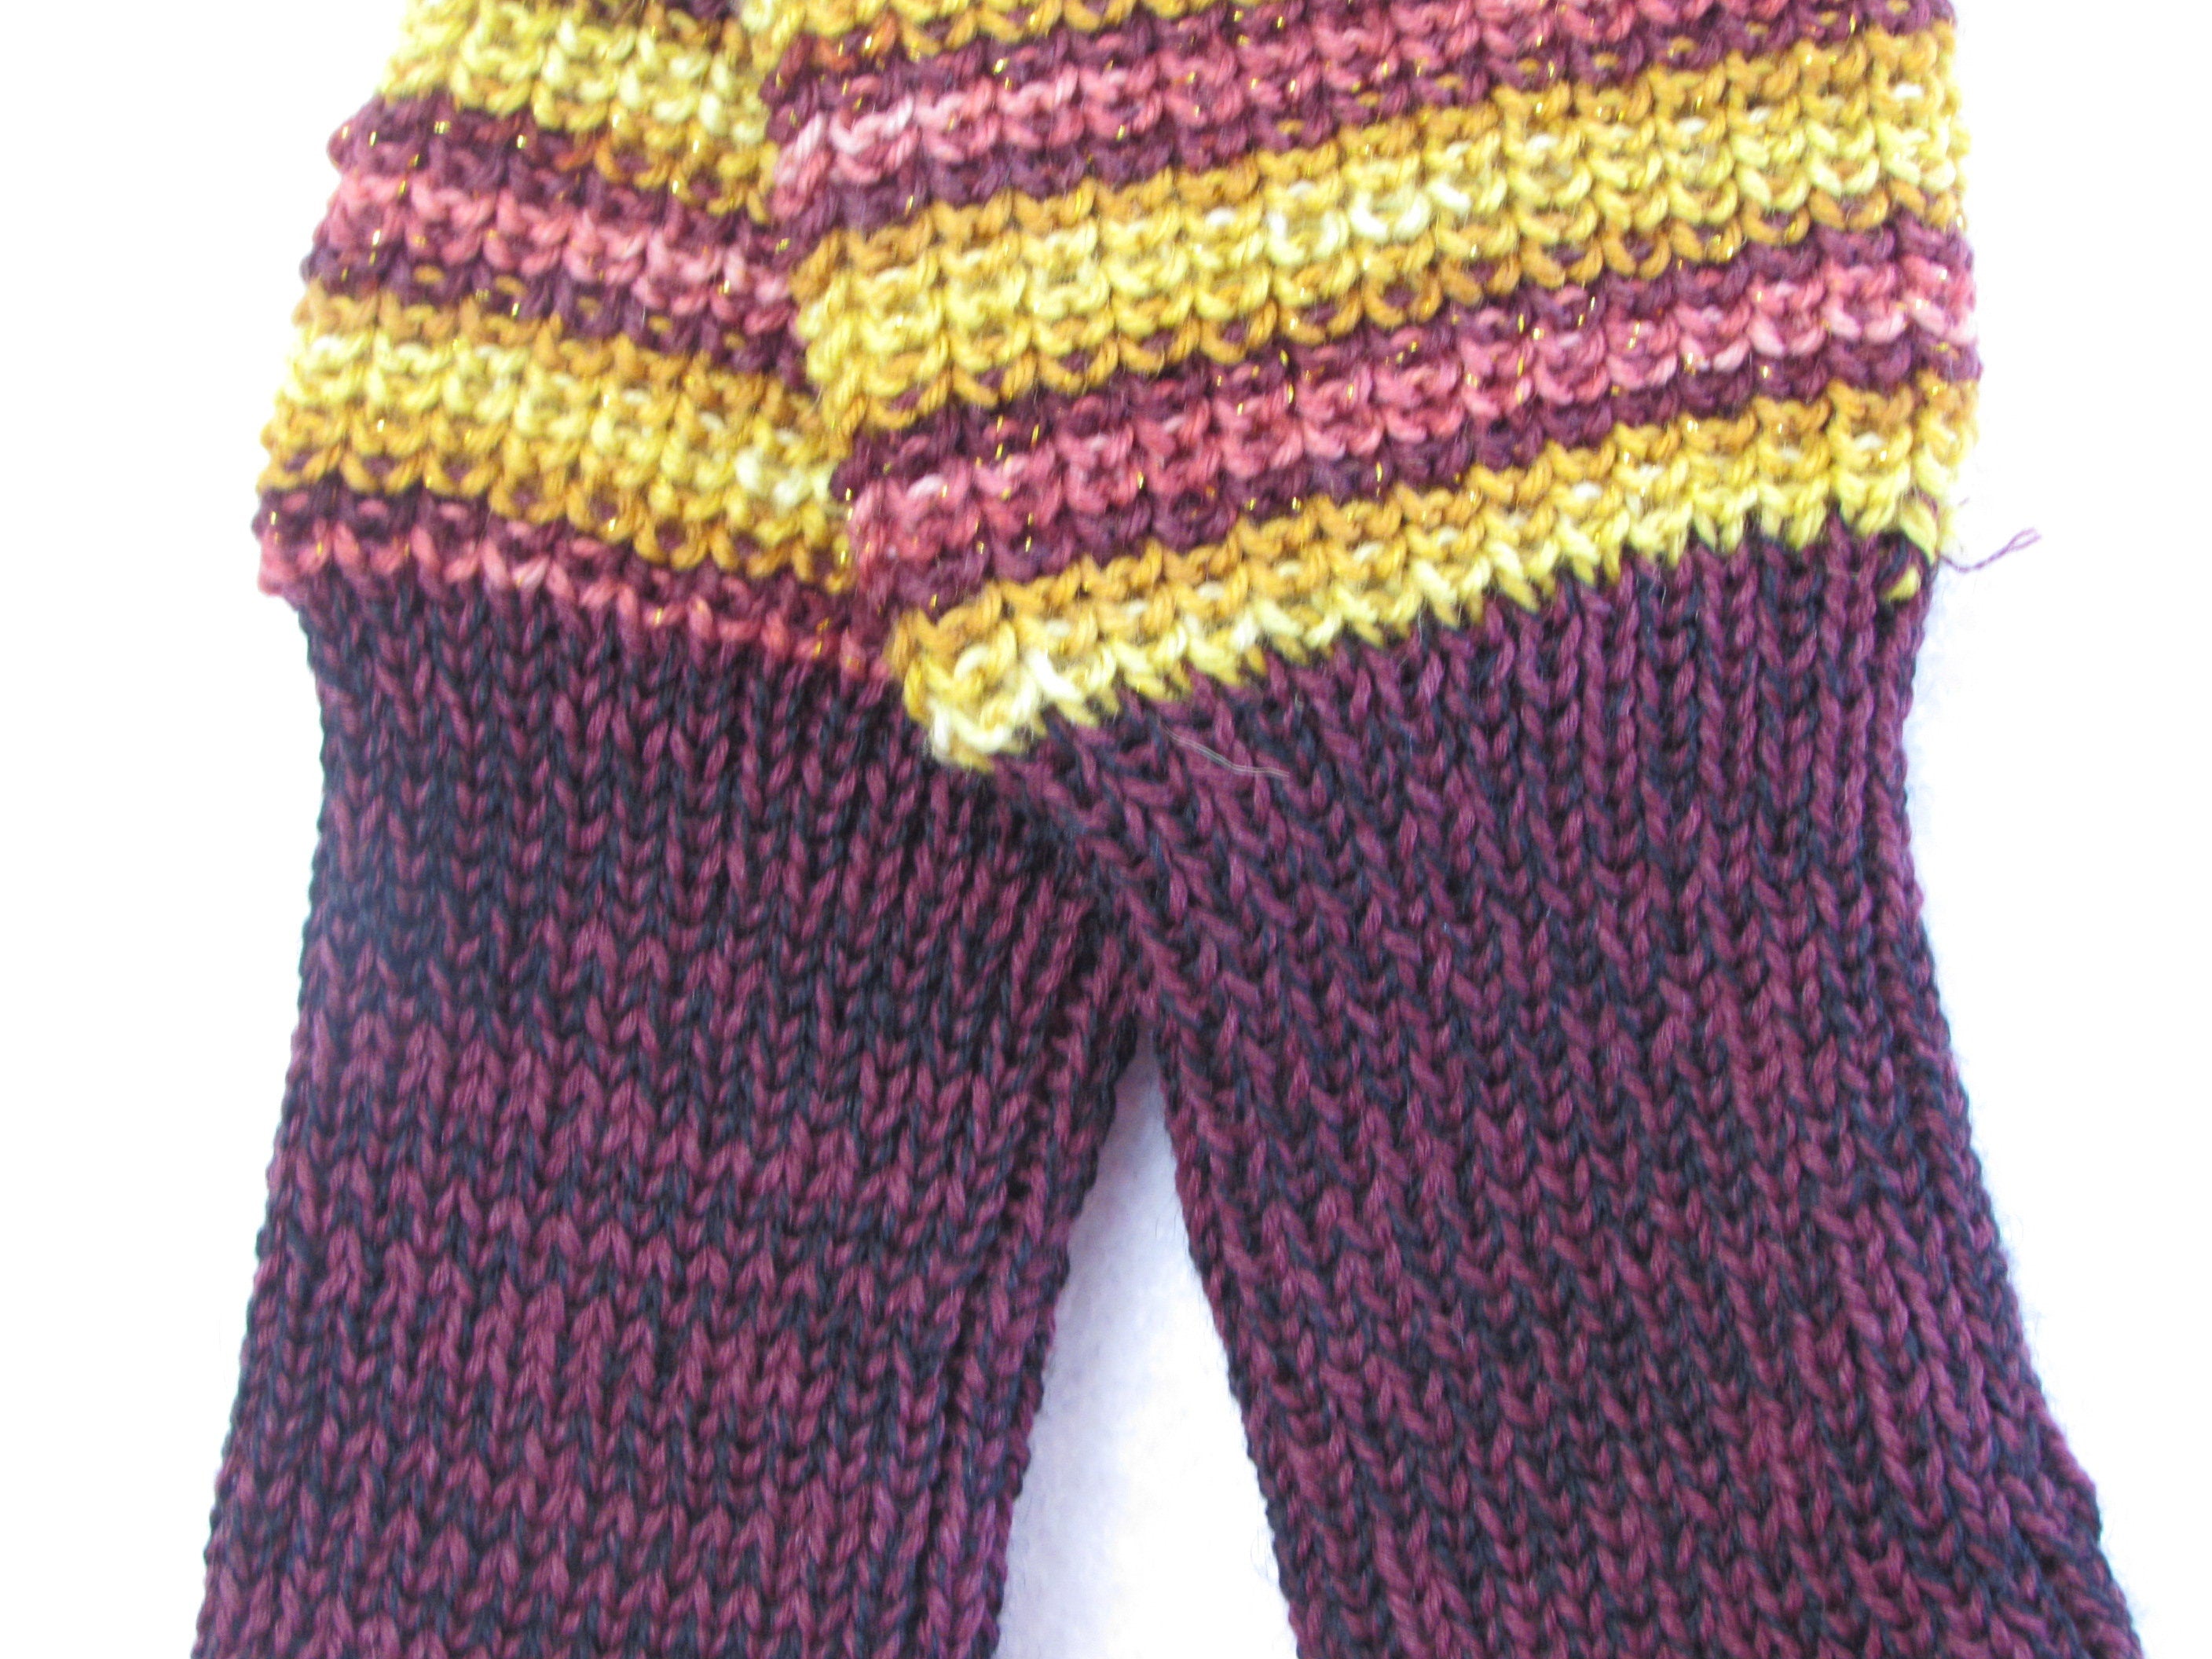 FM2018-1 Arm Warmers-Knit Fingerless Glove-Fingerless Gloves Women-Fingerless Wrister Warmers-Knit Fingerless-Winter Gloves-Knit Arm Warmers